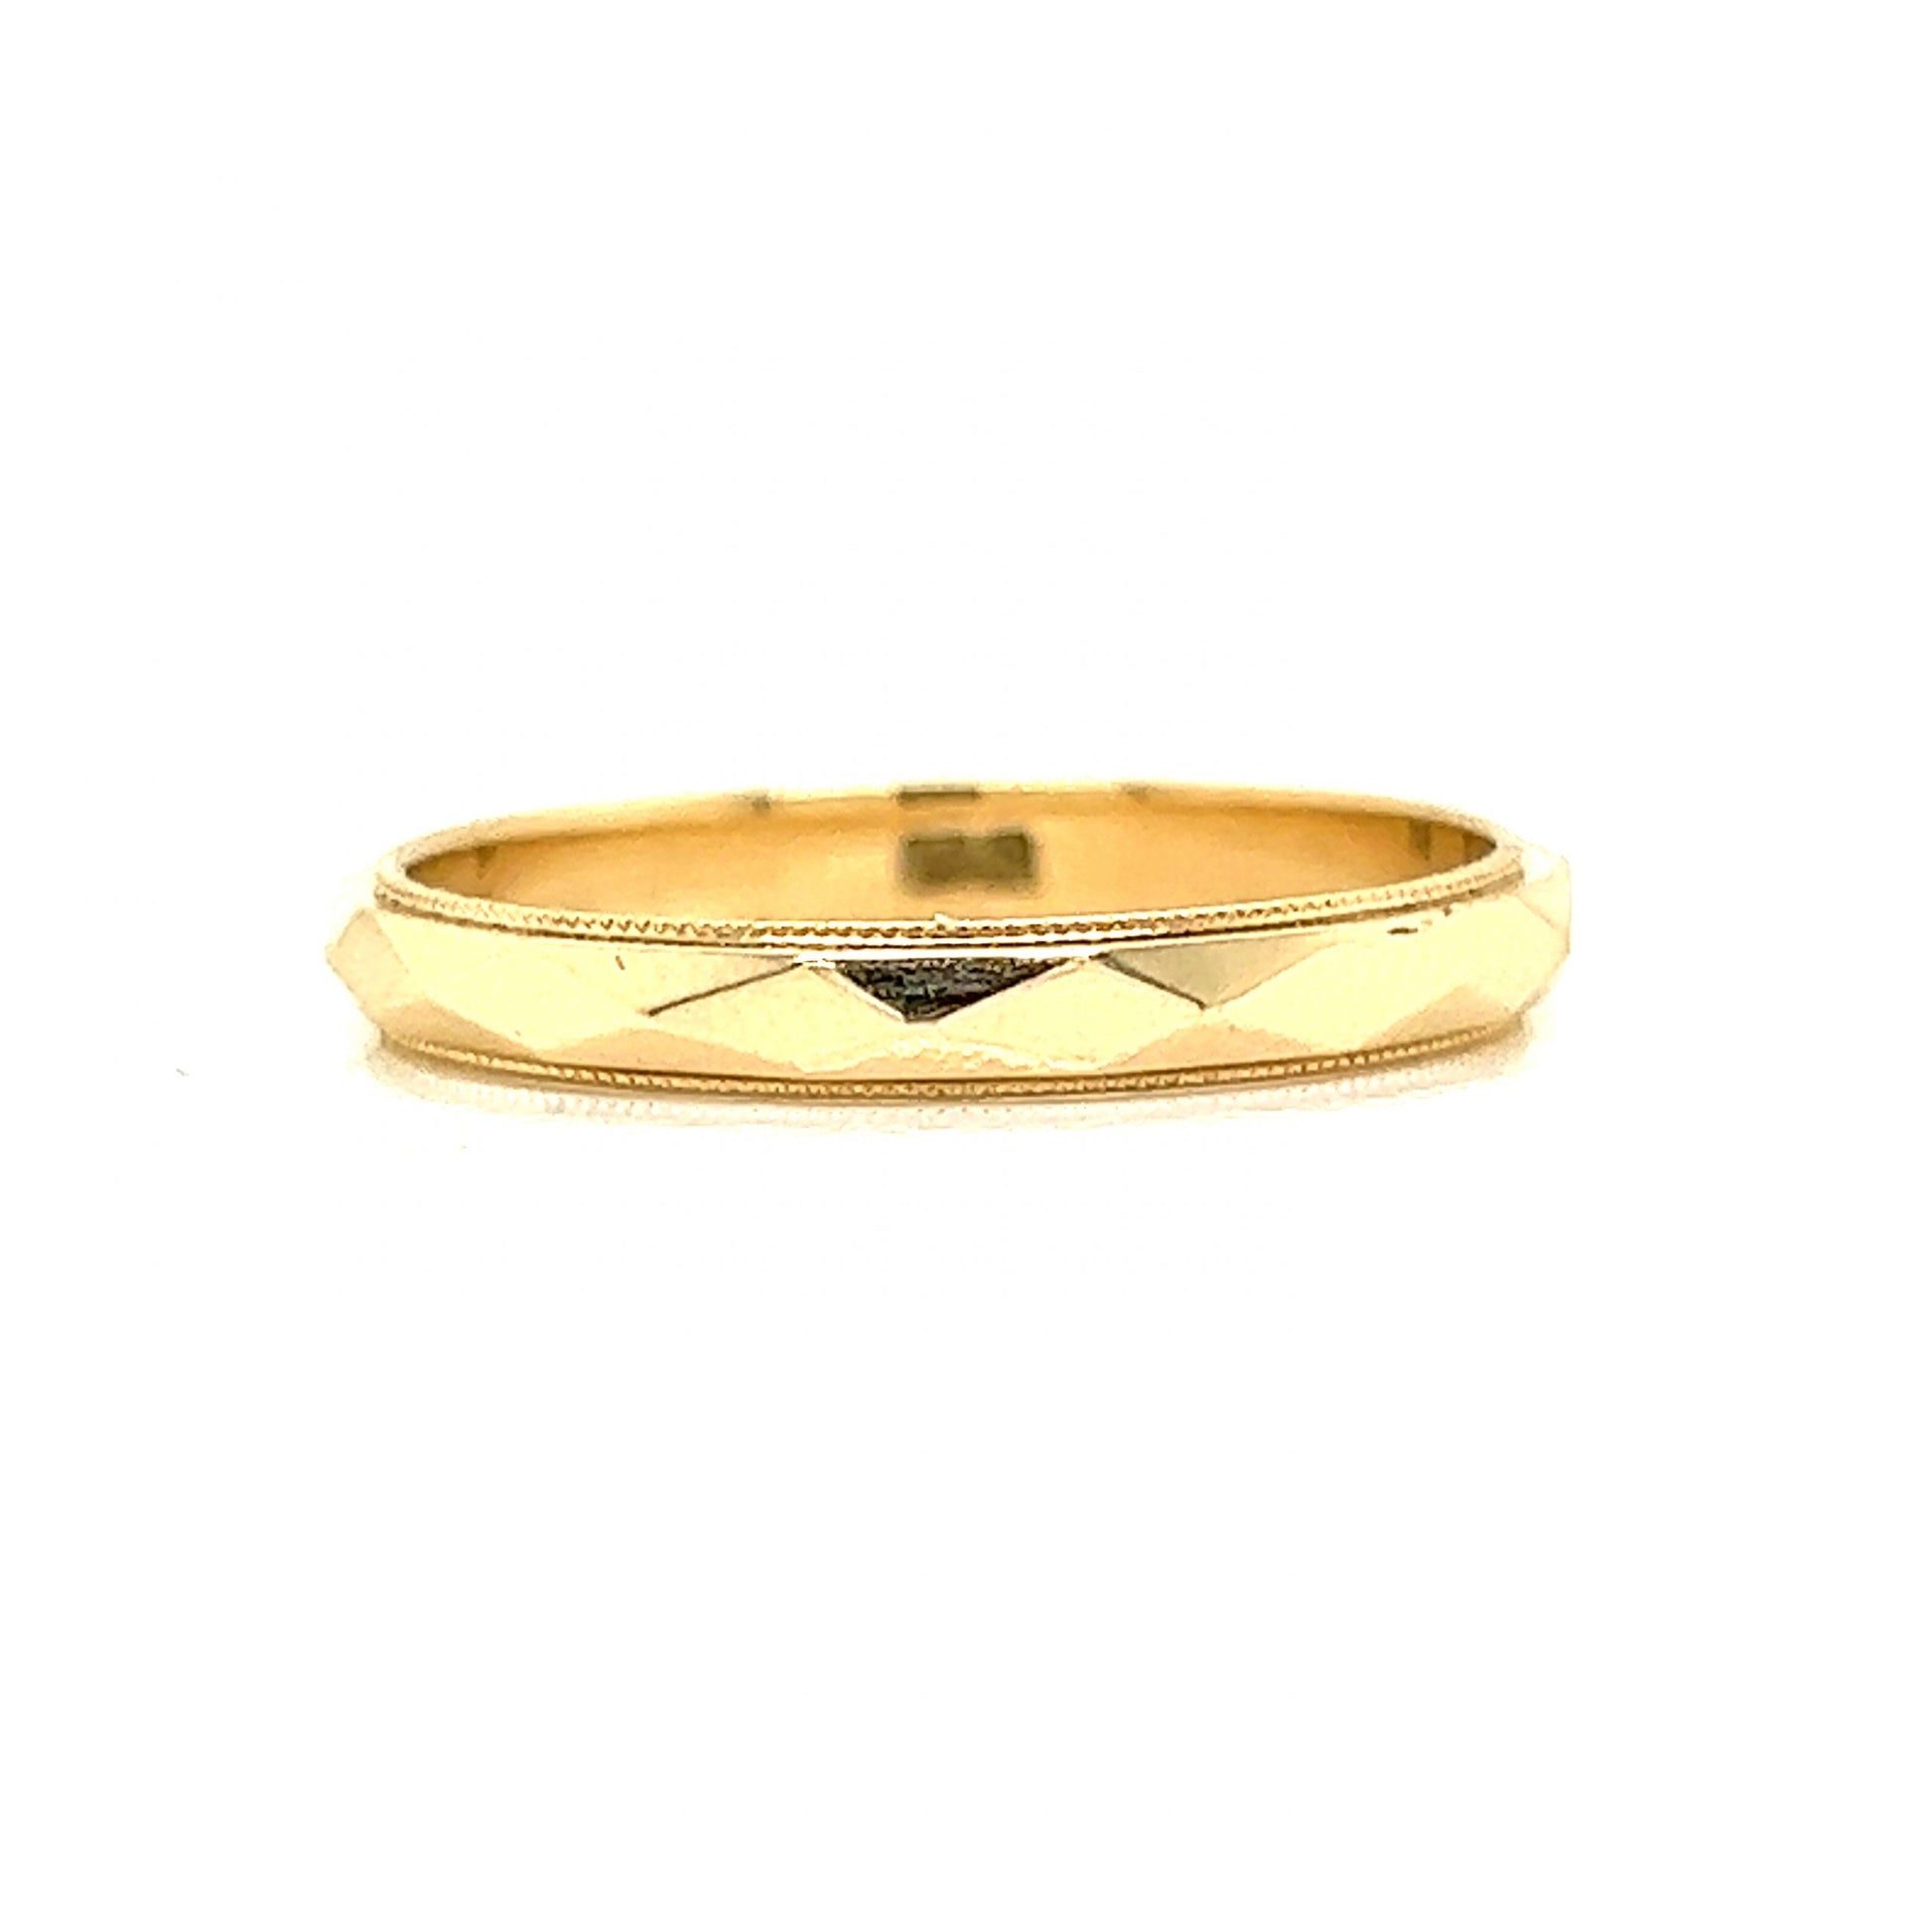 Geometric Milgrain Wedding Band in 14k Yellow GoldComposition: 14 Karat Yellow Gold Ring Size: 7 Total Gram Weight: 2.0 g Inscription: 14k
      